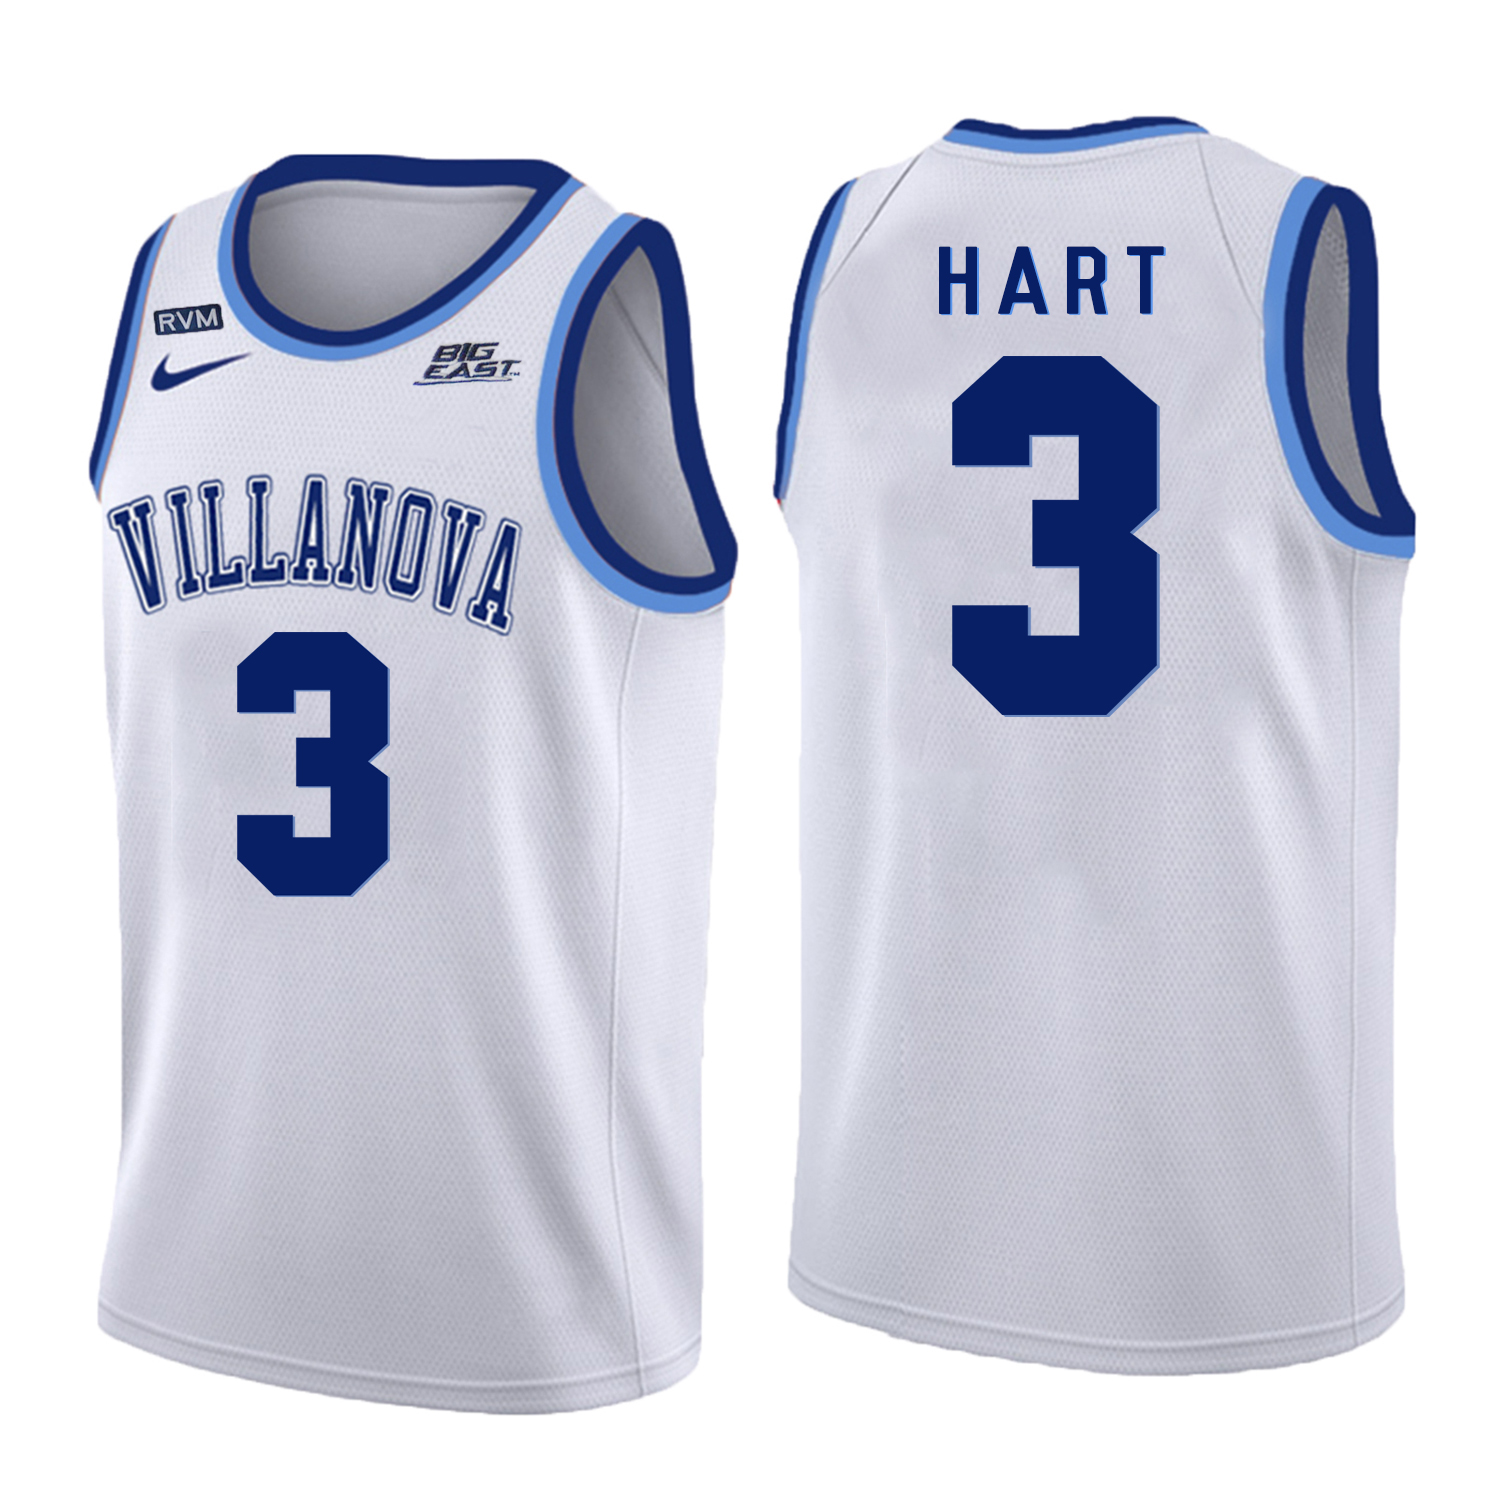 Villanova Wildcats 3 Josh Hart White College Basketball Jersey